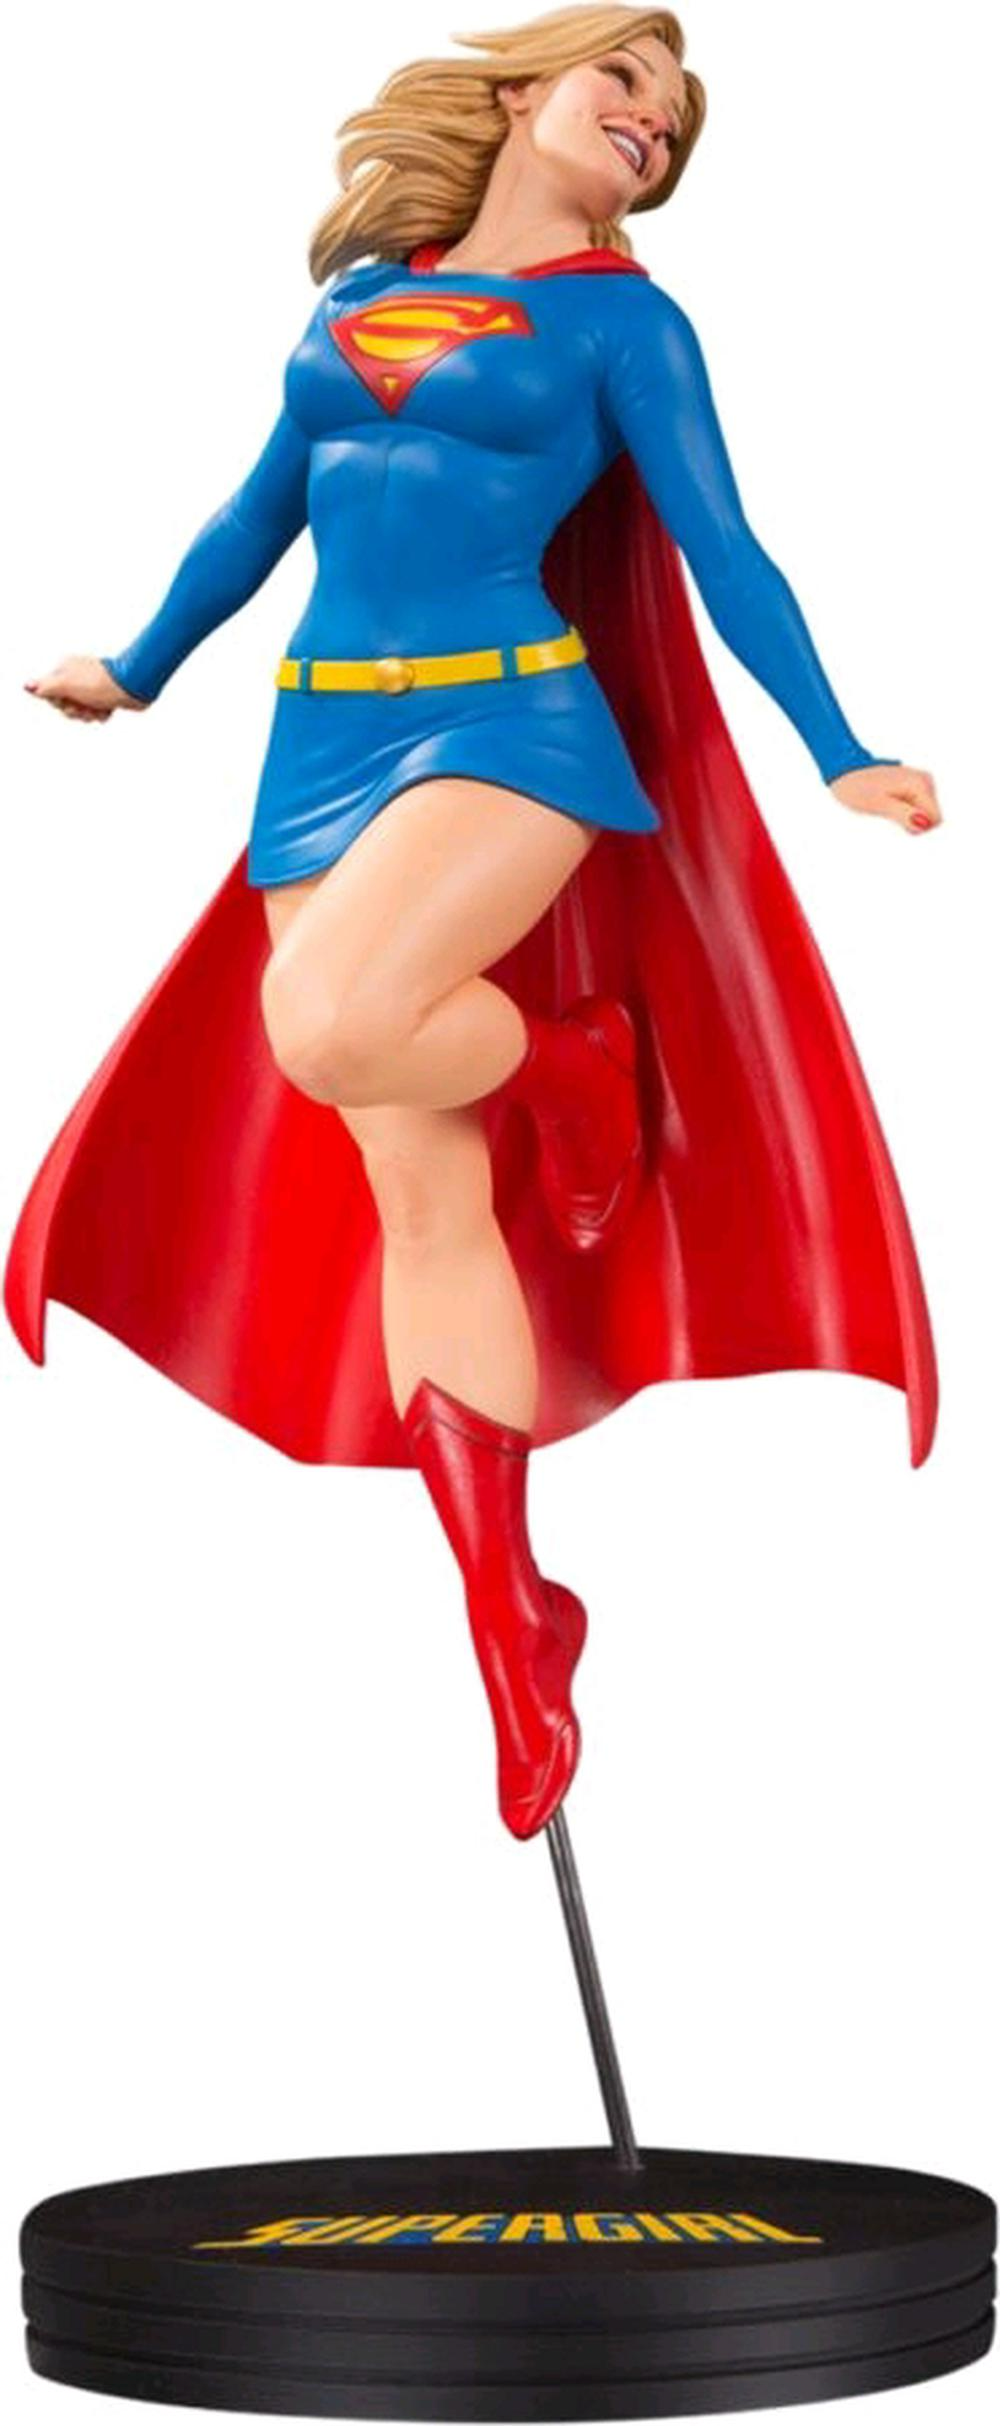 Фигурка Supergirl by Frank Cho 25см 36328